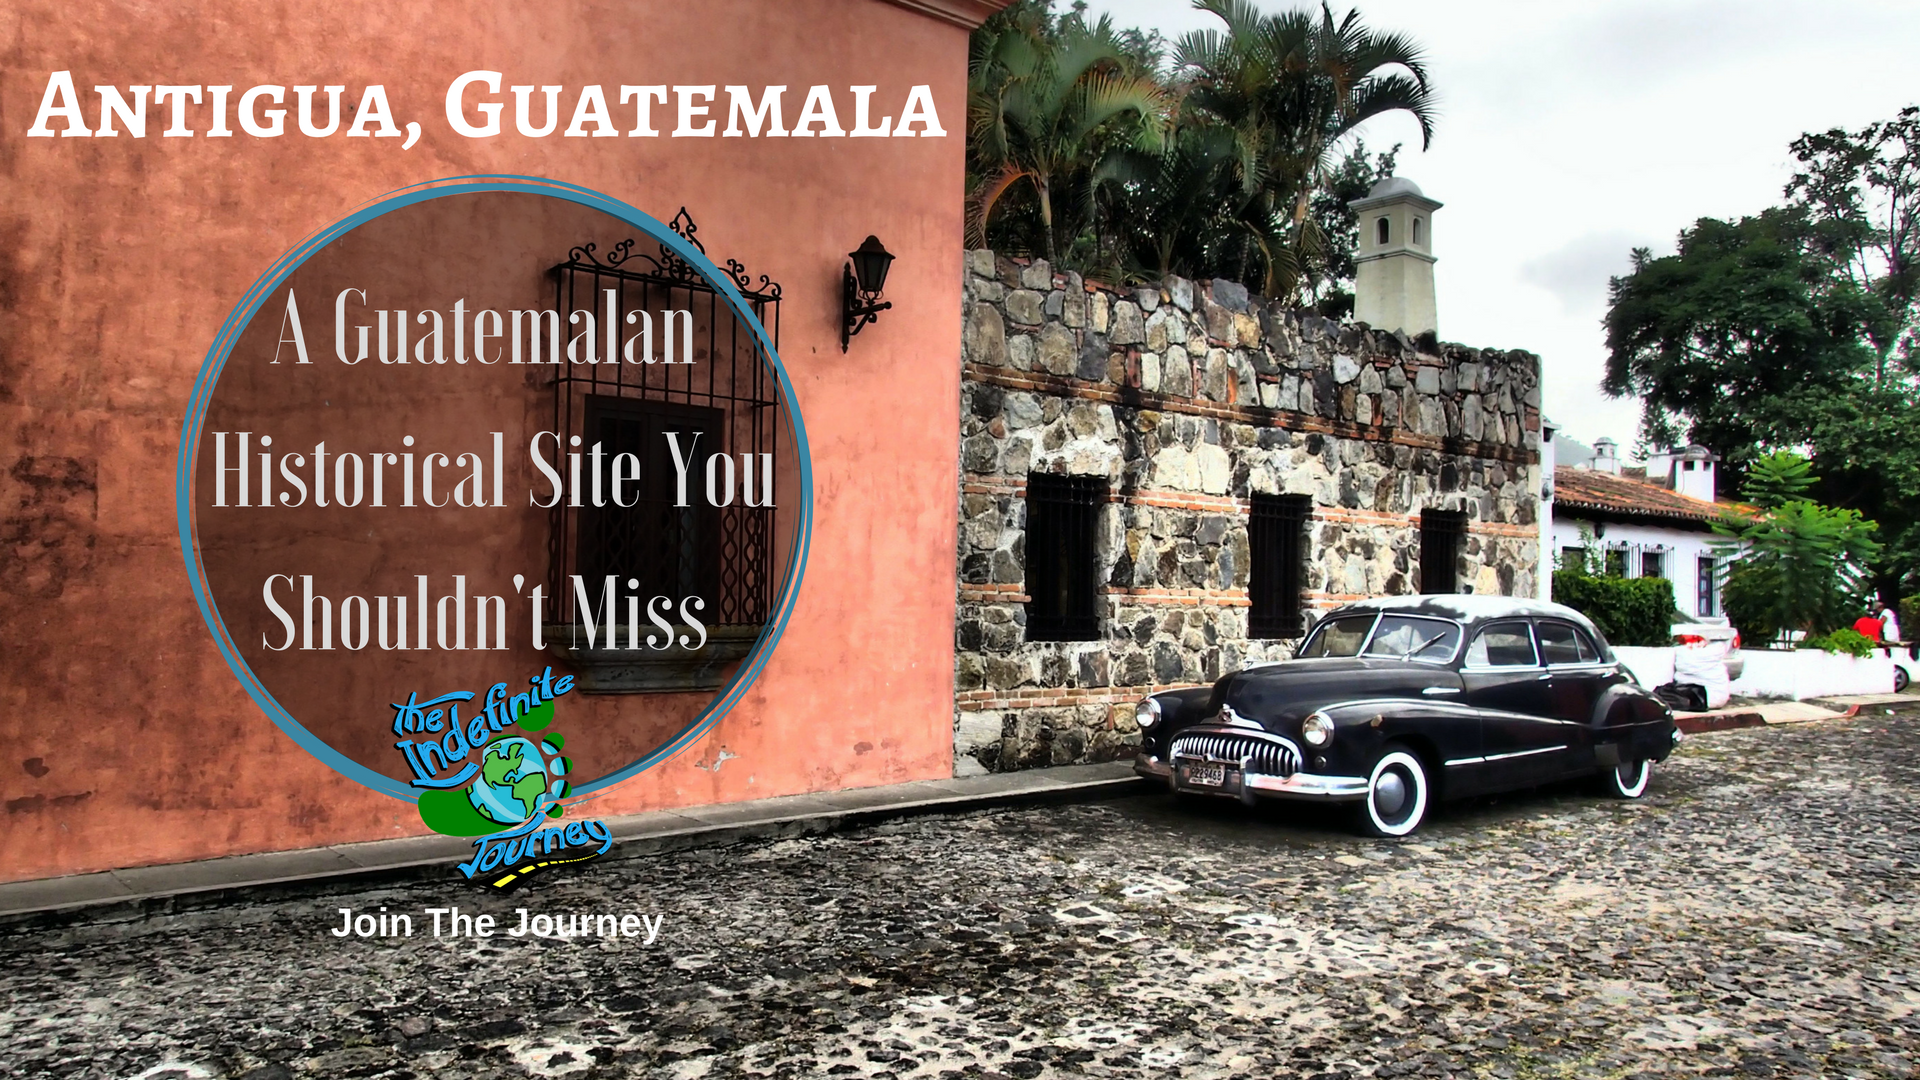 A Guatemalan Historical Site You Shouldn't Miss - Antigua, Guatemala